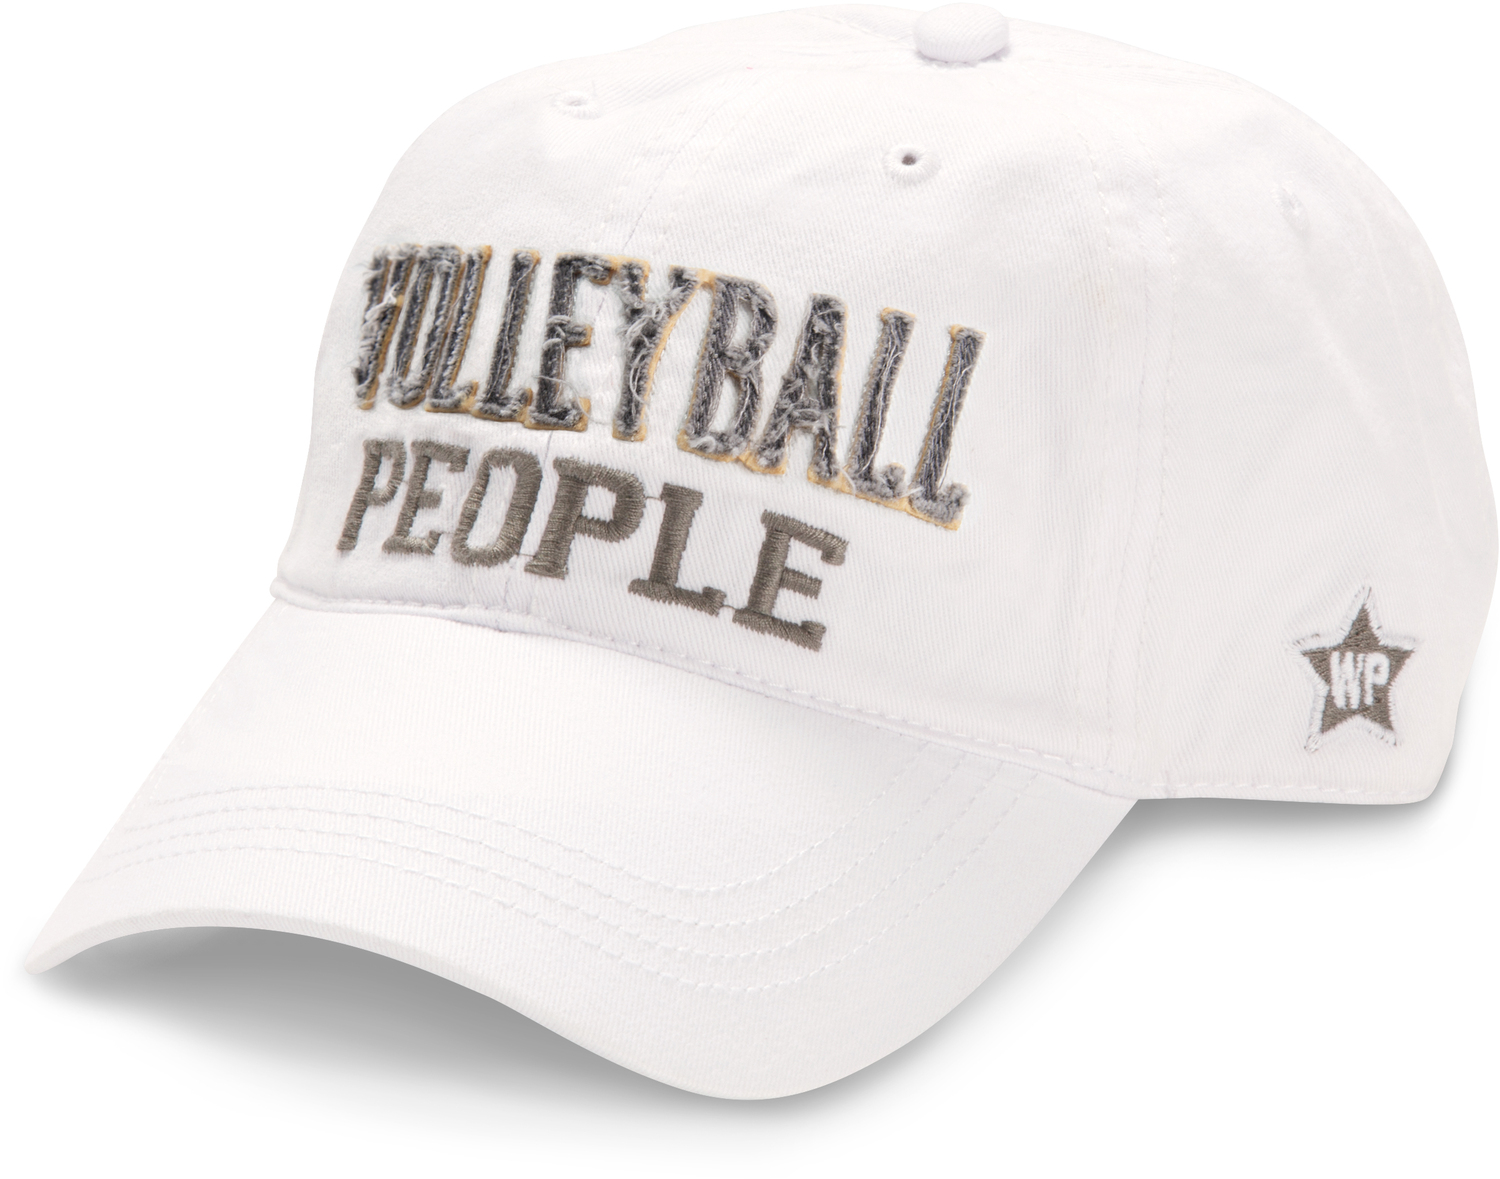 Volleyball People by We People - Volleyball People - White Adjustable Hat